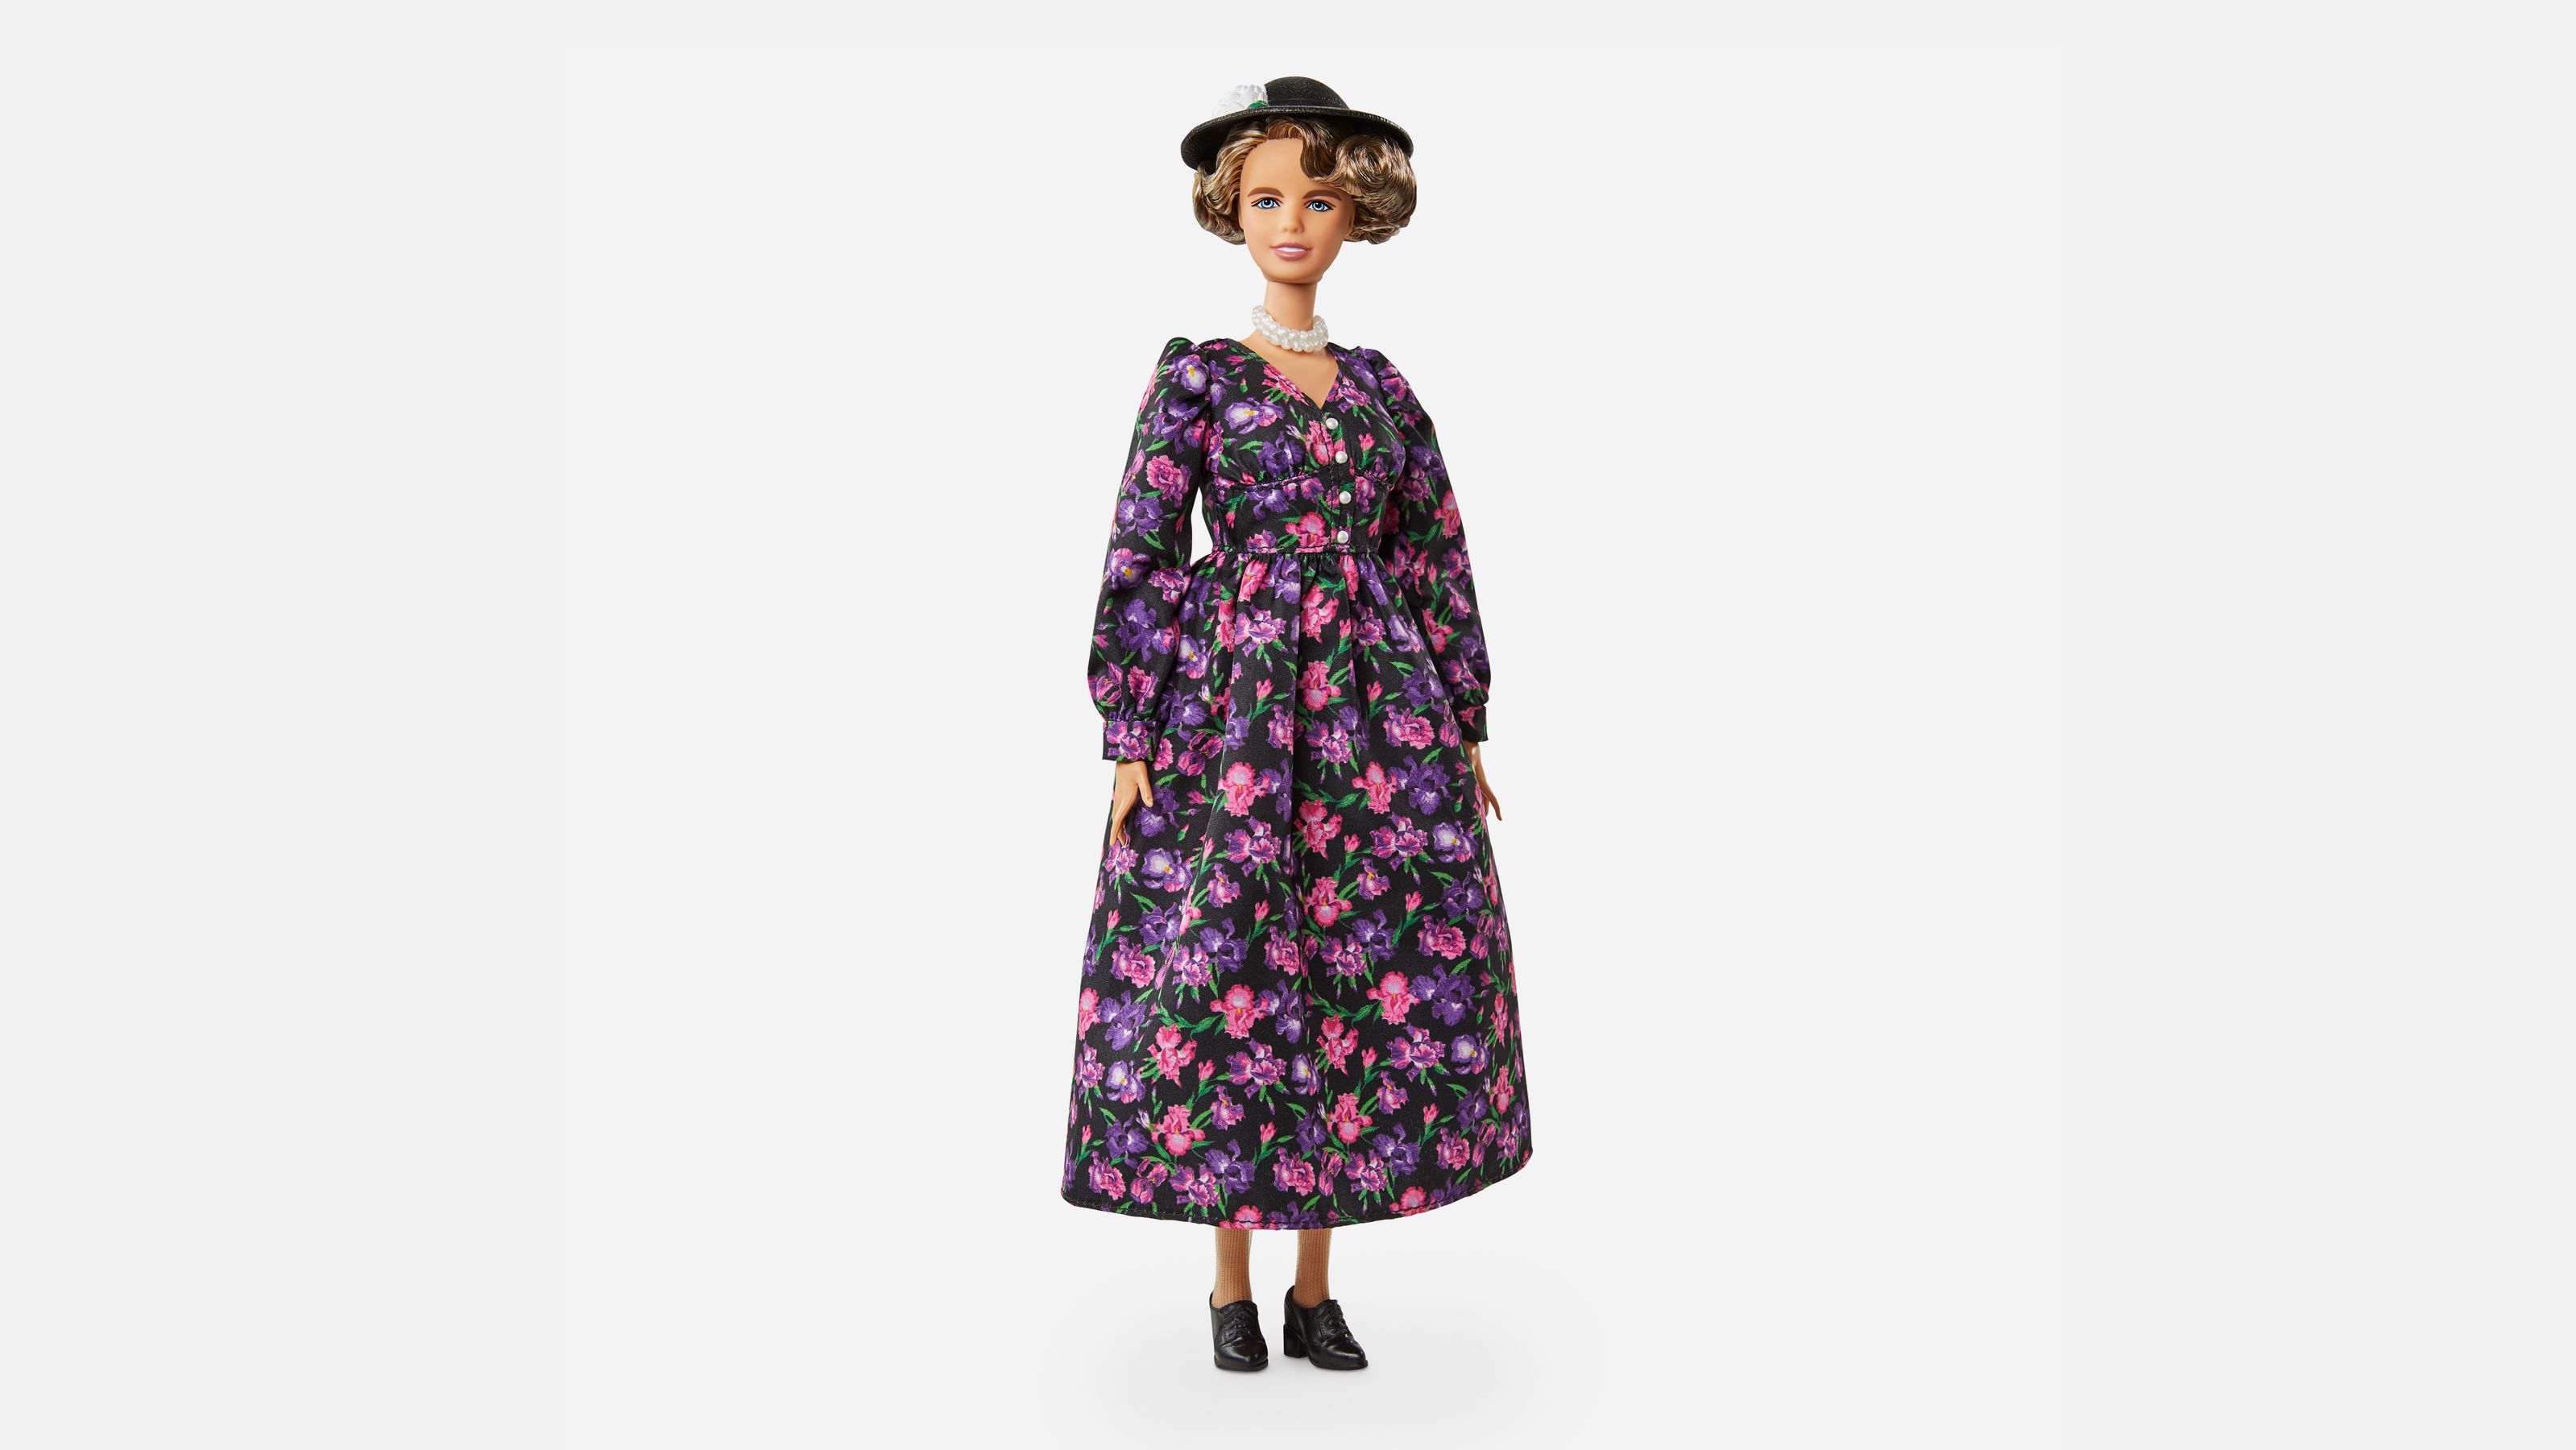 20210304-Eleanor-Roosevelt-doll